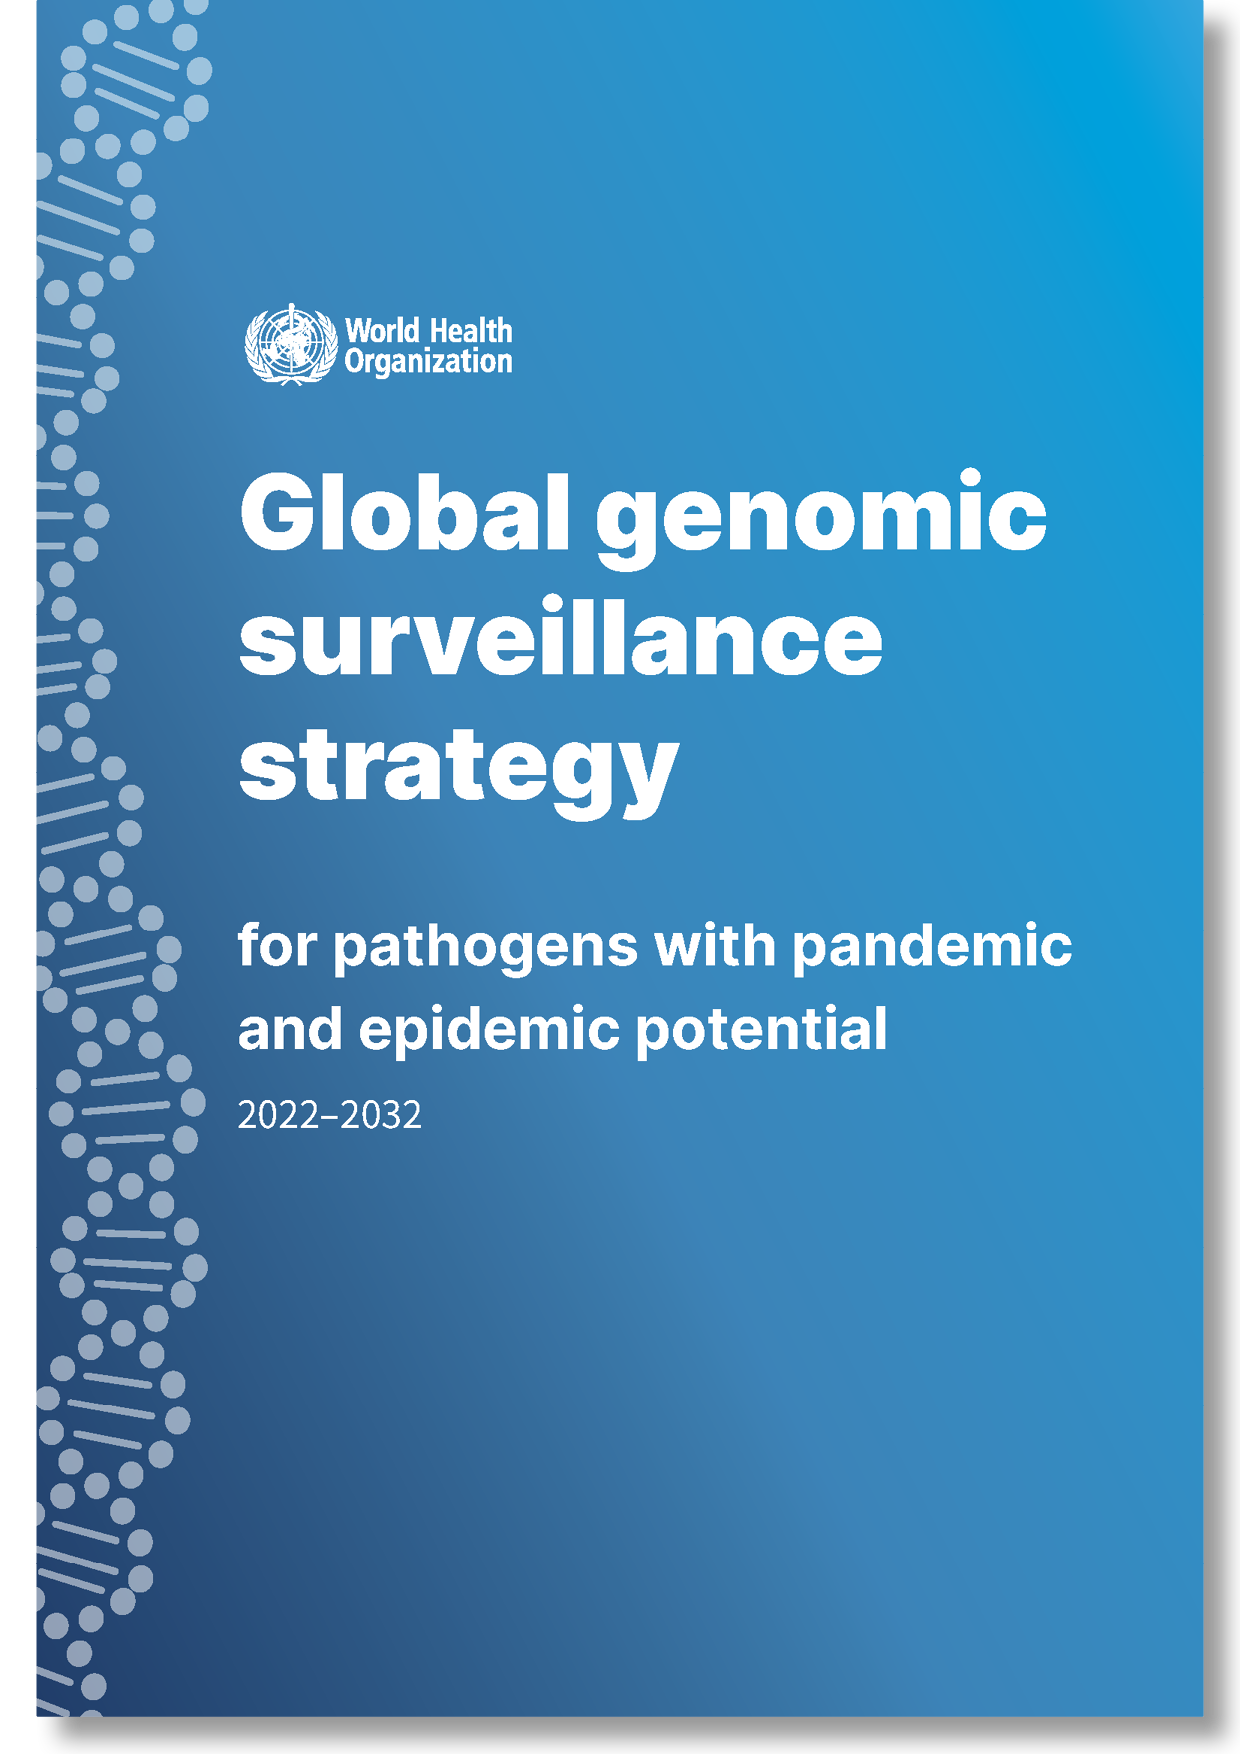 WHO Global Genomic Surveillance Strategy